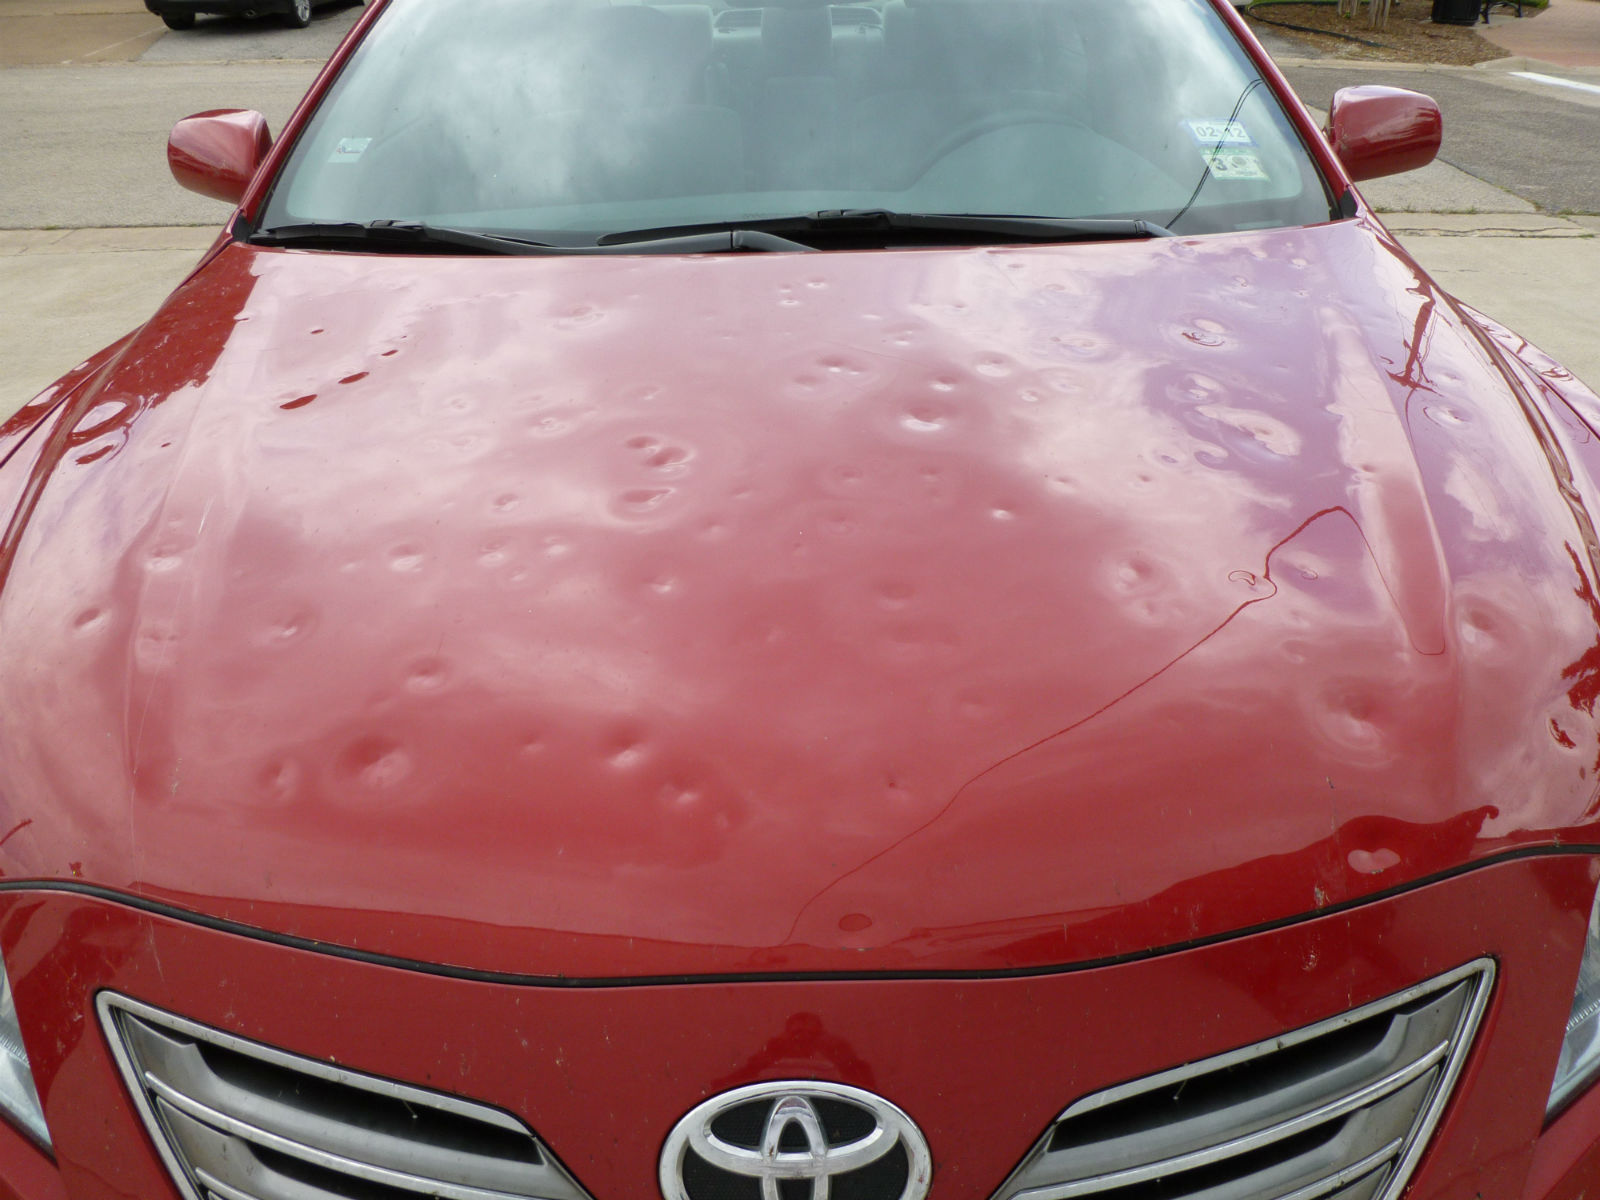 Toyota Camry Hood Pummeled by Baseball Sized Hail - Dent Biz